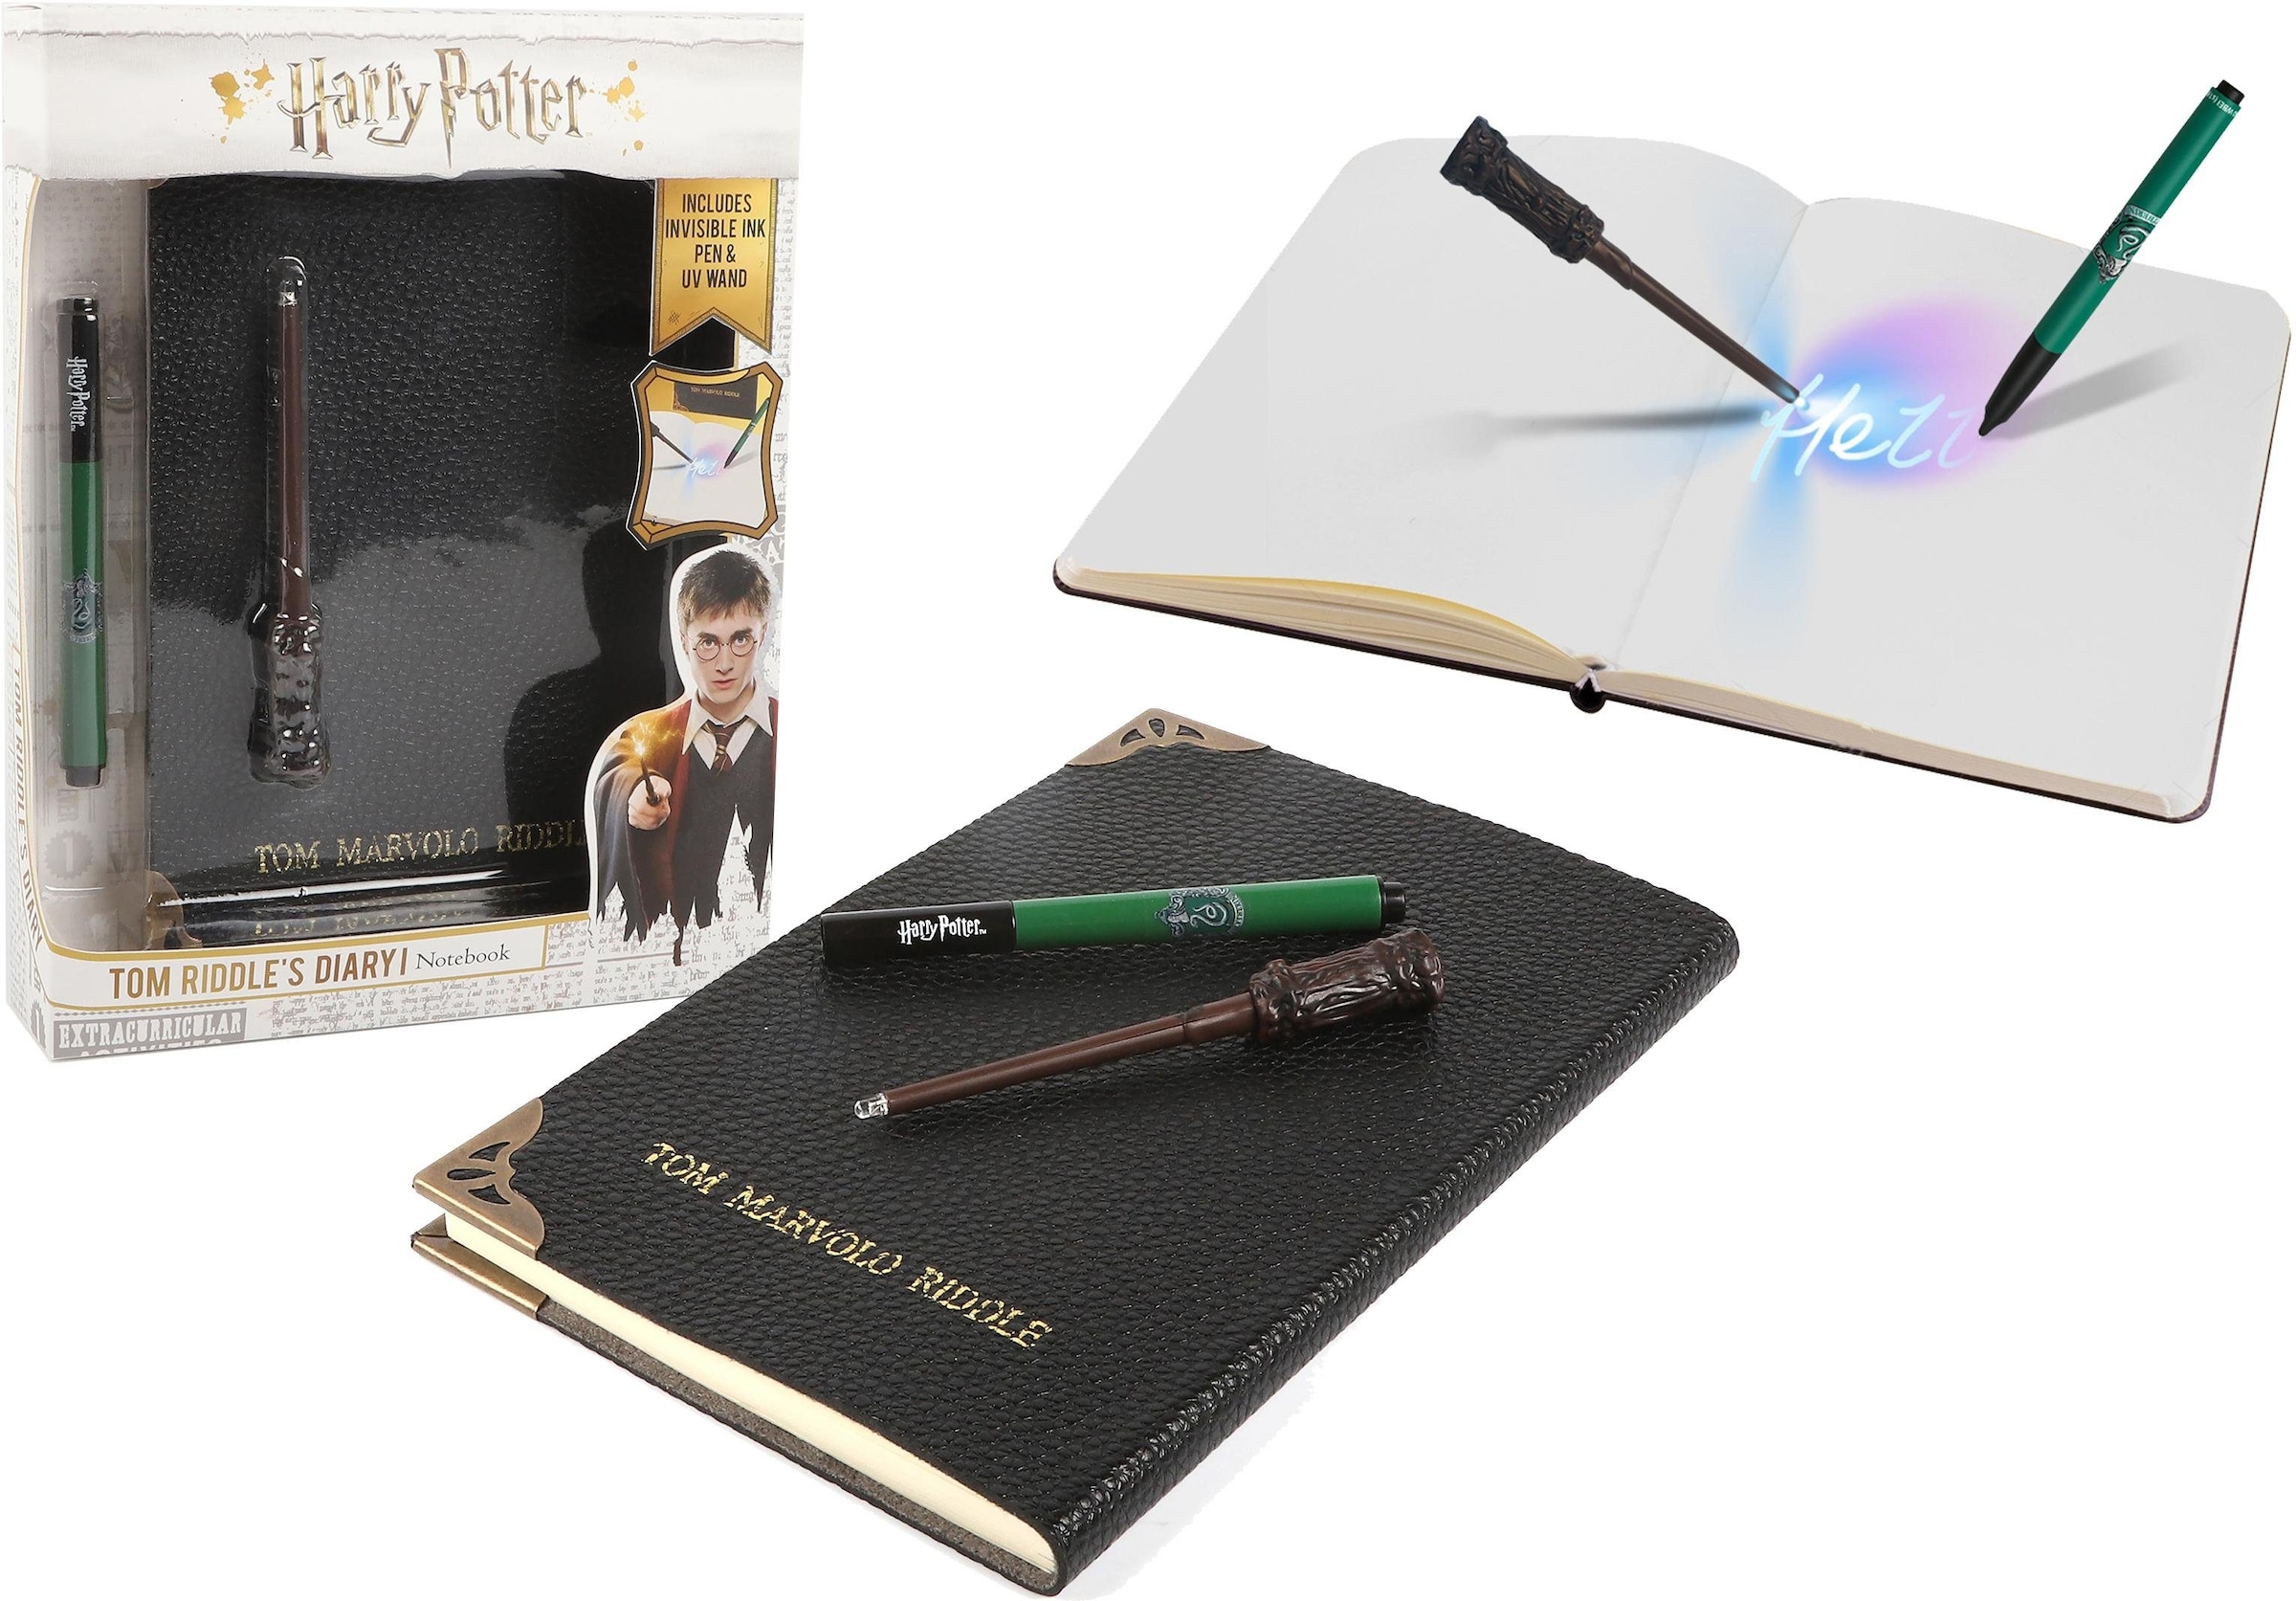 Harry Potter Notebook Schreibwarengeschäft Set mit Stift